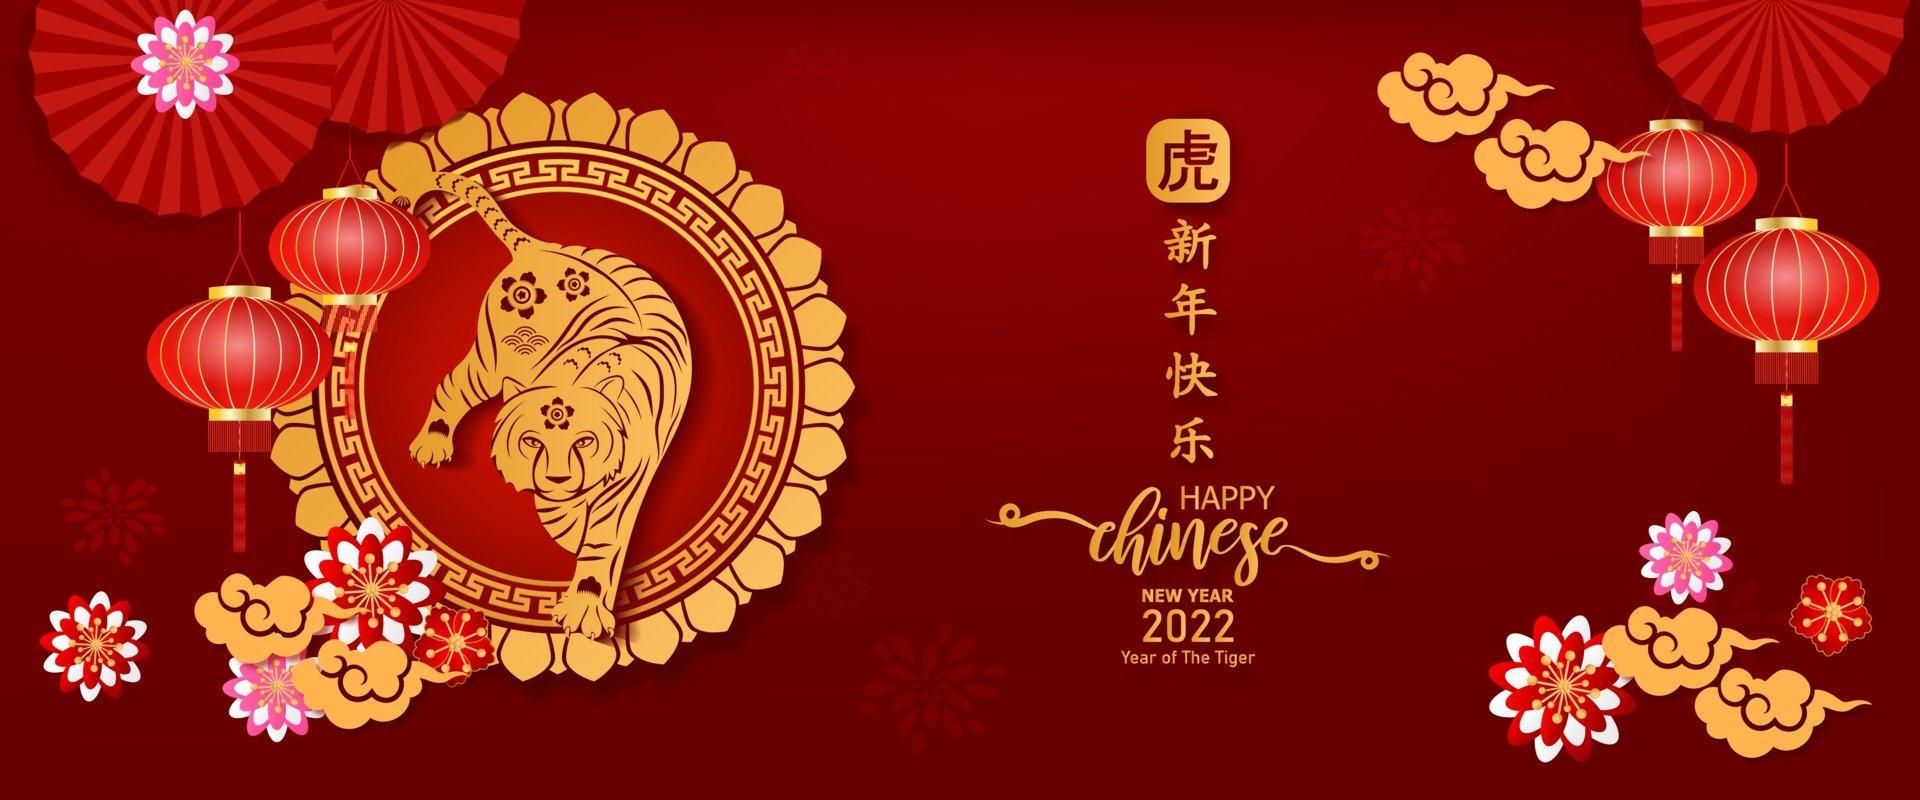 Chinese new year background 2022